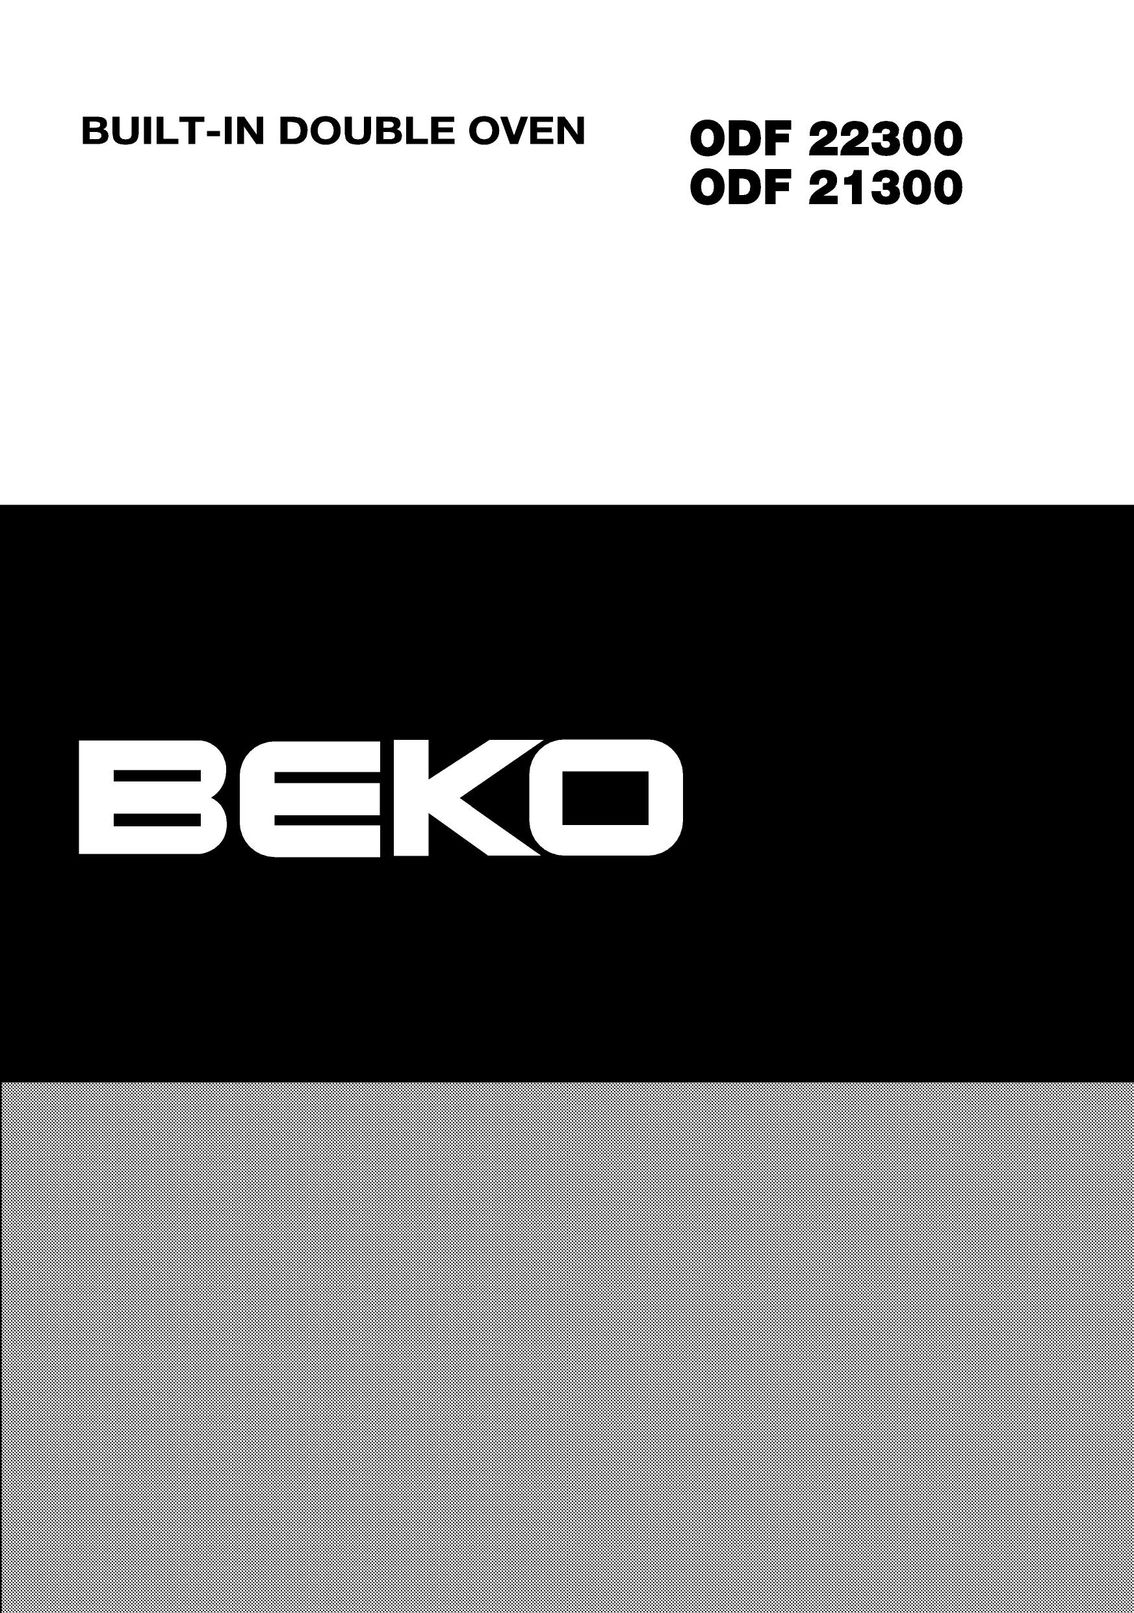 Beko ODF 21300 Double Oven User Manual